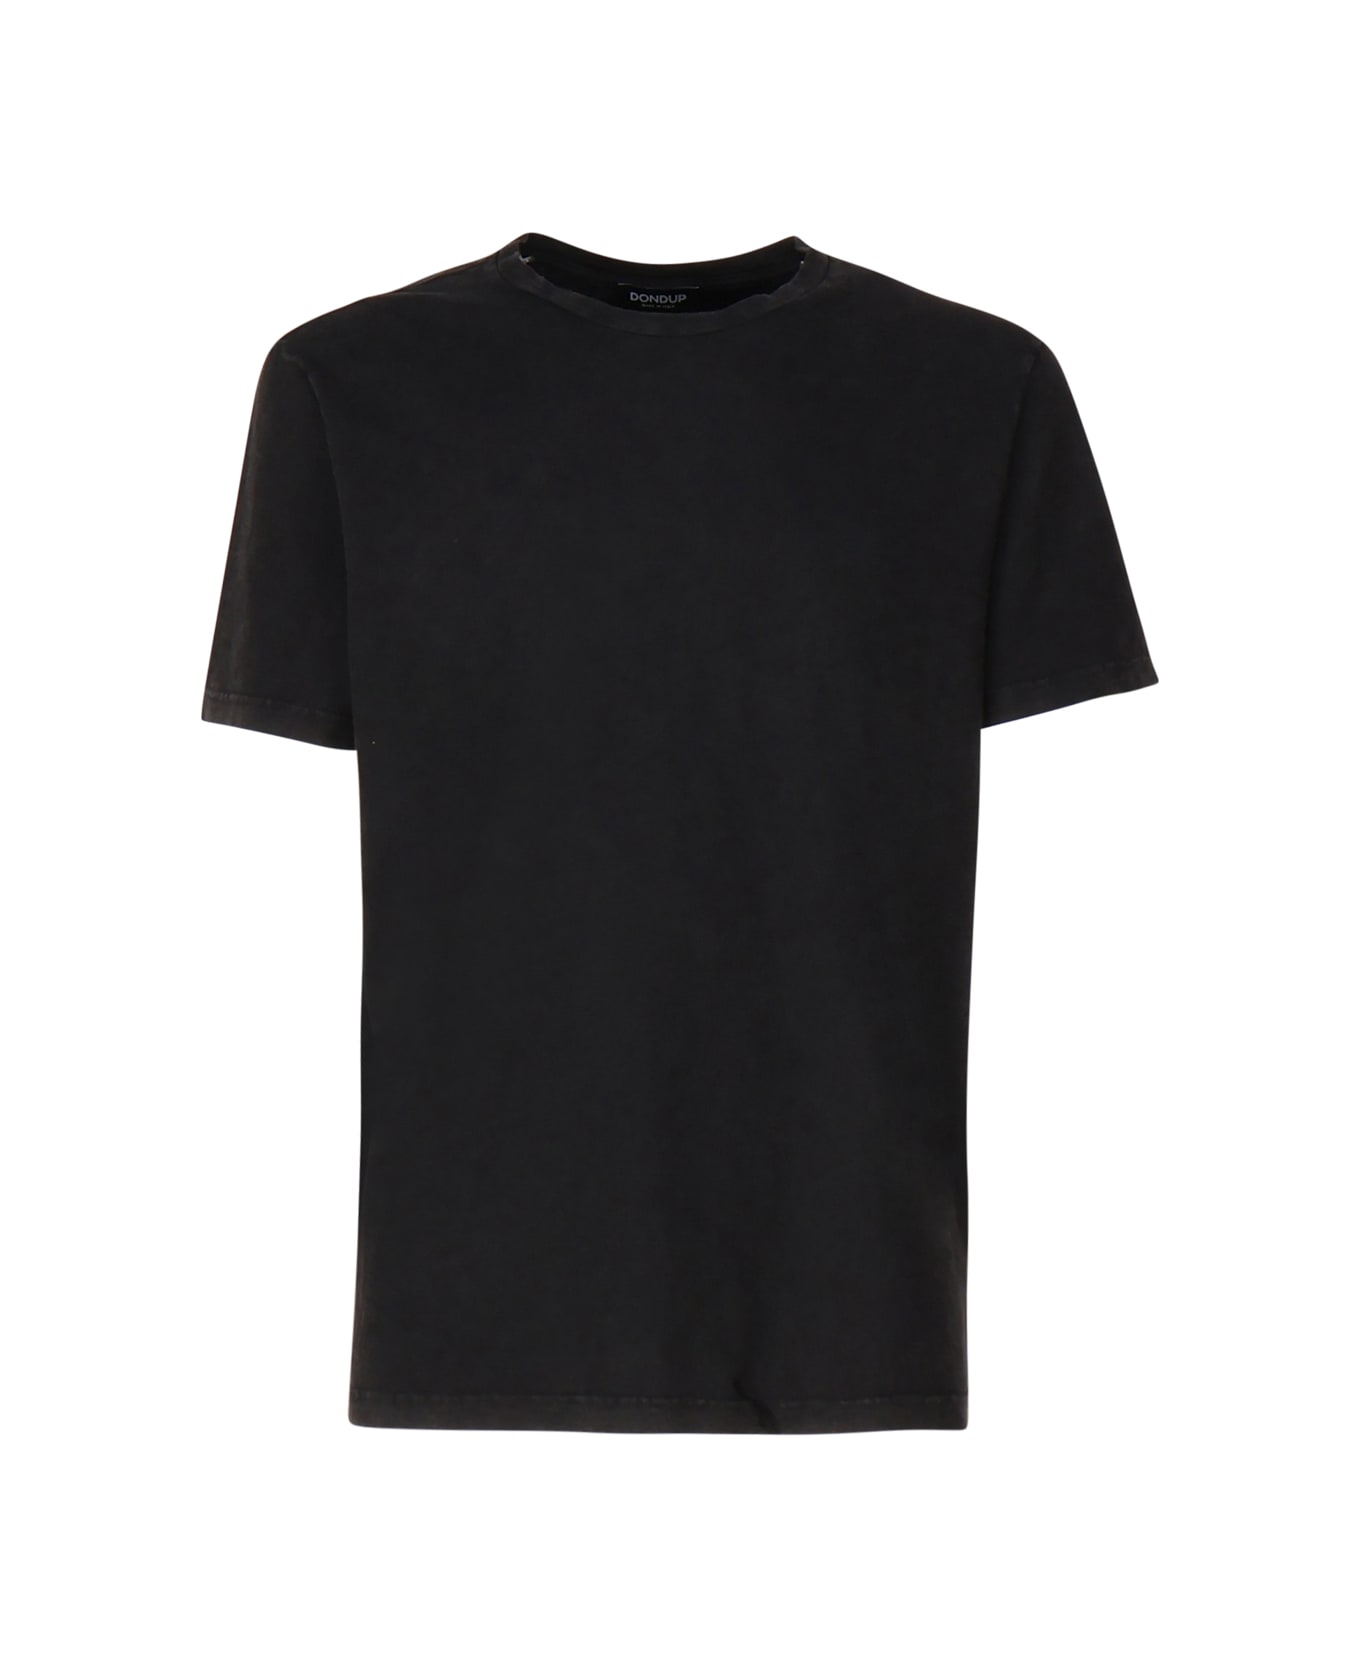 Dondup Regular Jersey T-shirt - Black シャツ